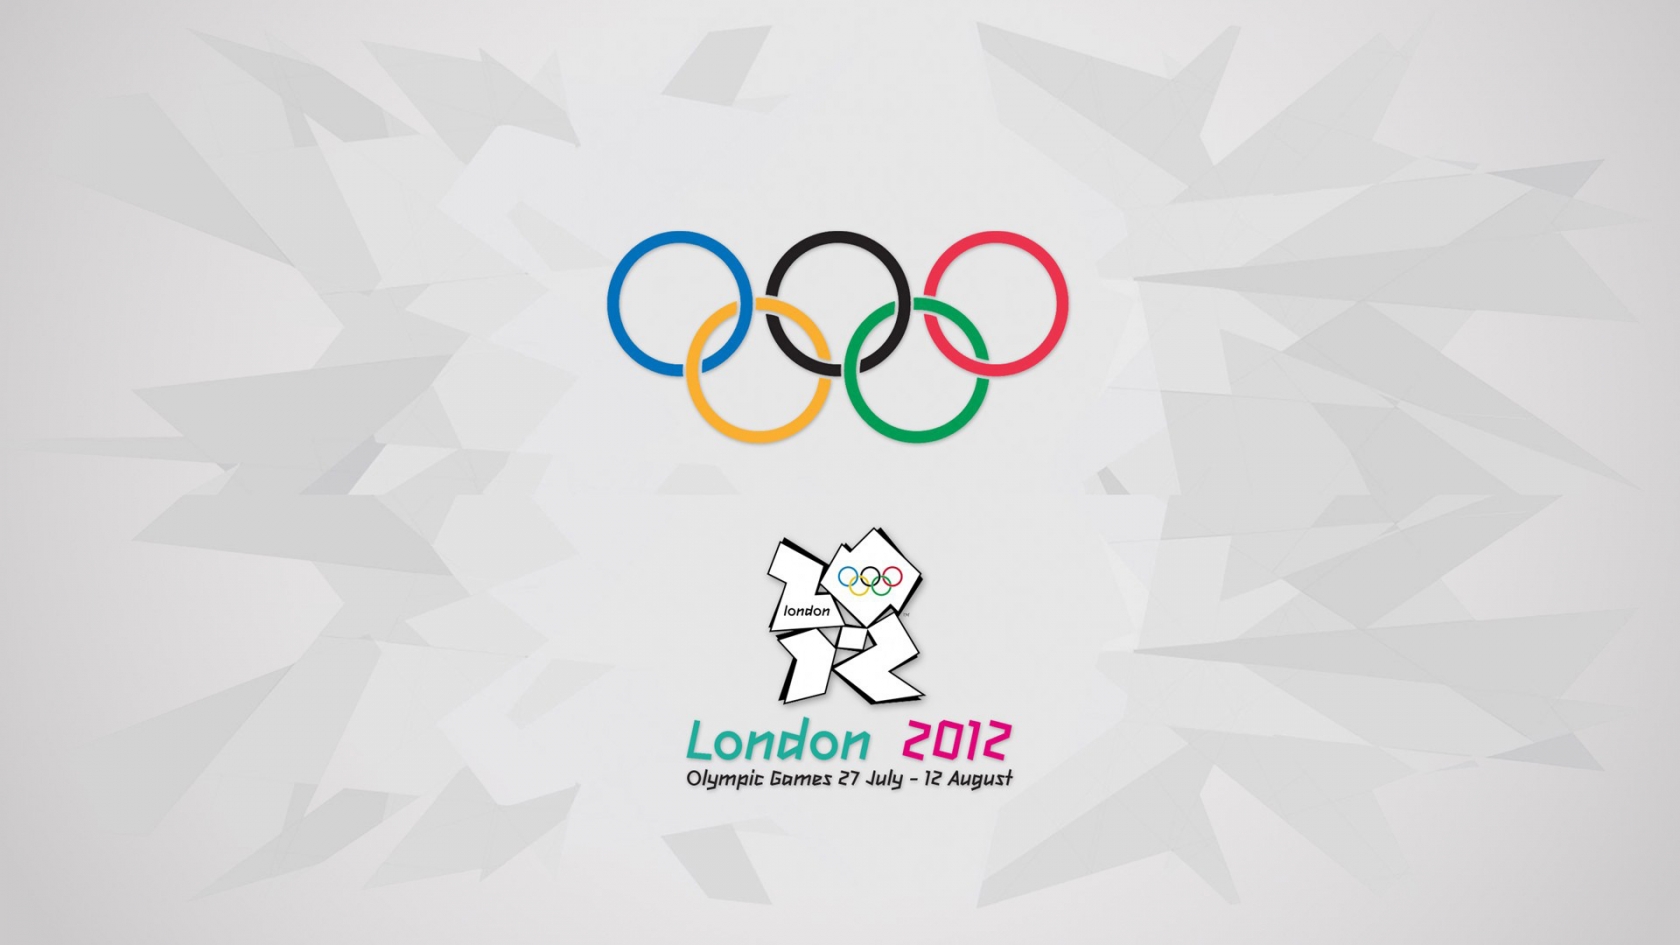 London Olympics for 1680 x 945 HDTV resolution